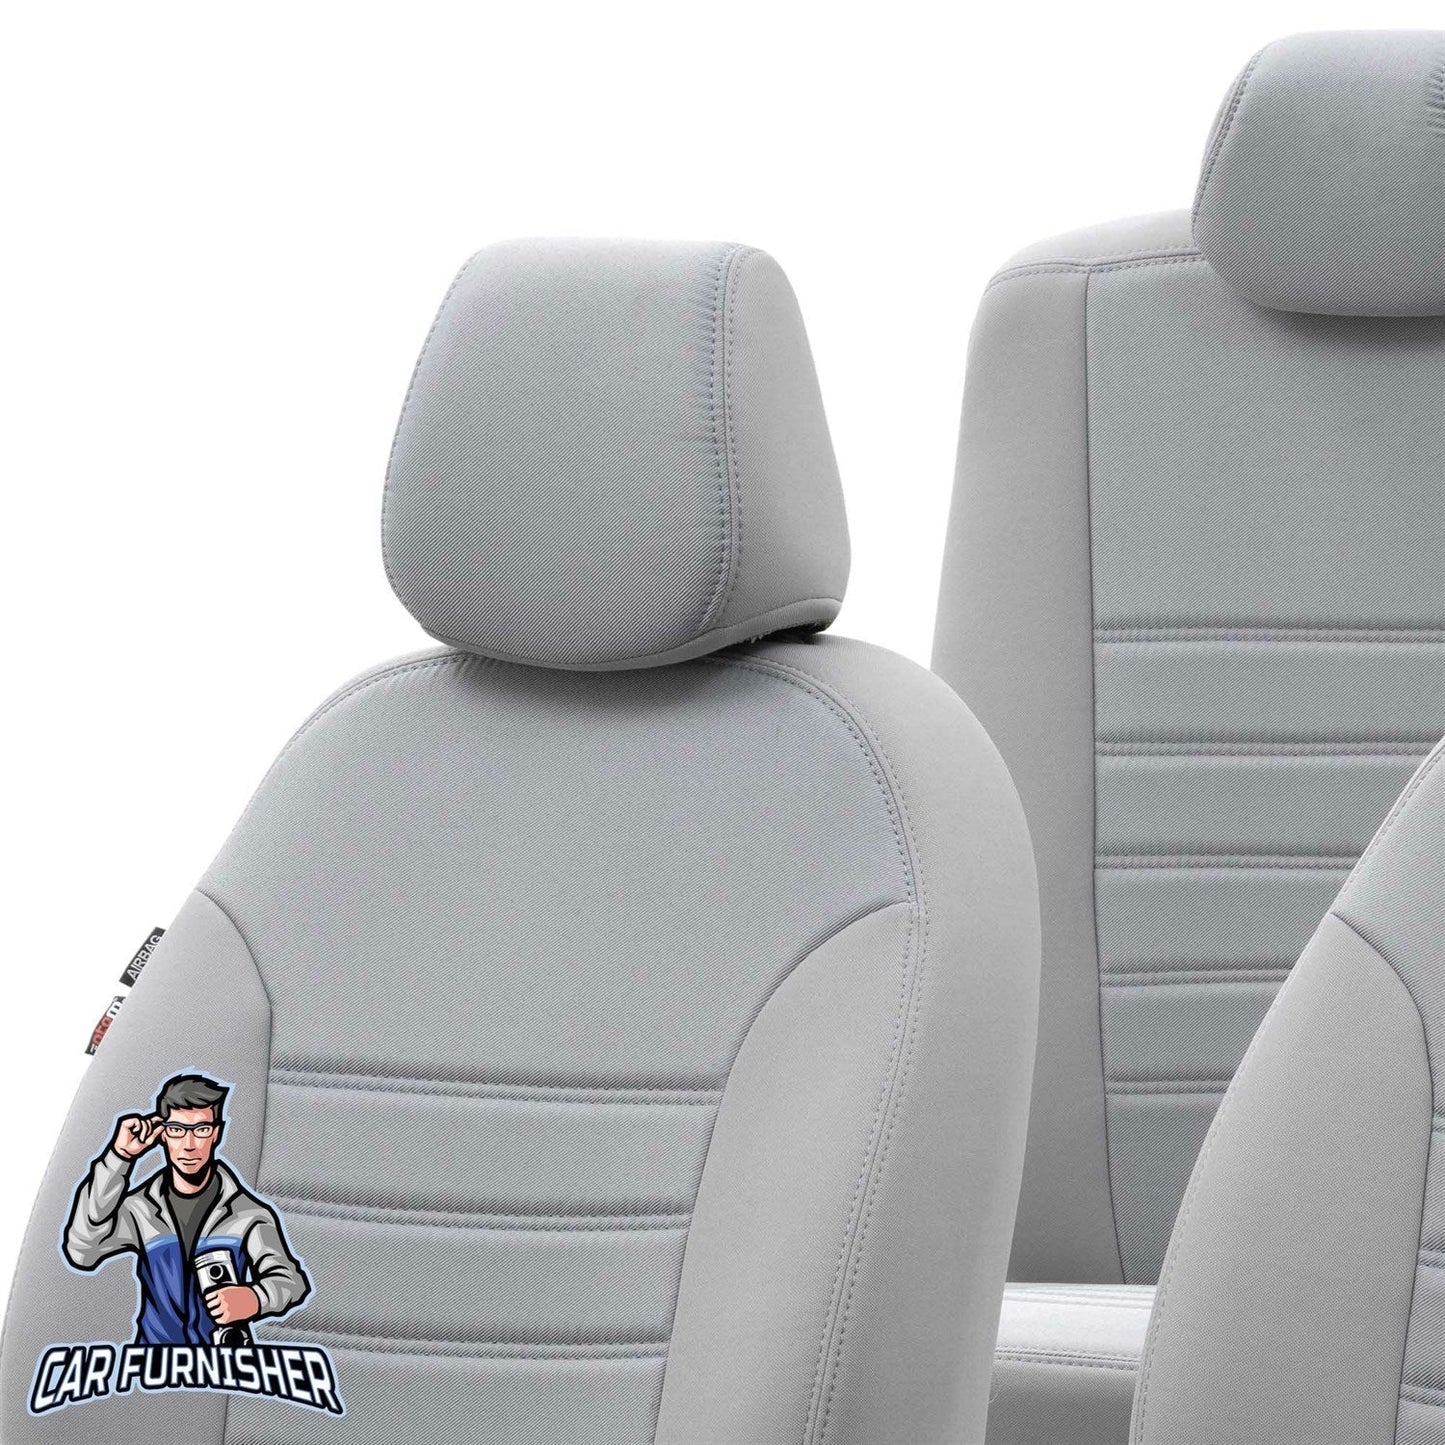 Opel Frontera Seat Cover Original Jacquard Design Light Gray Jacquard Fabric